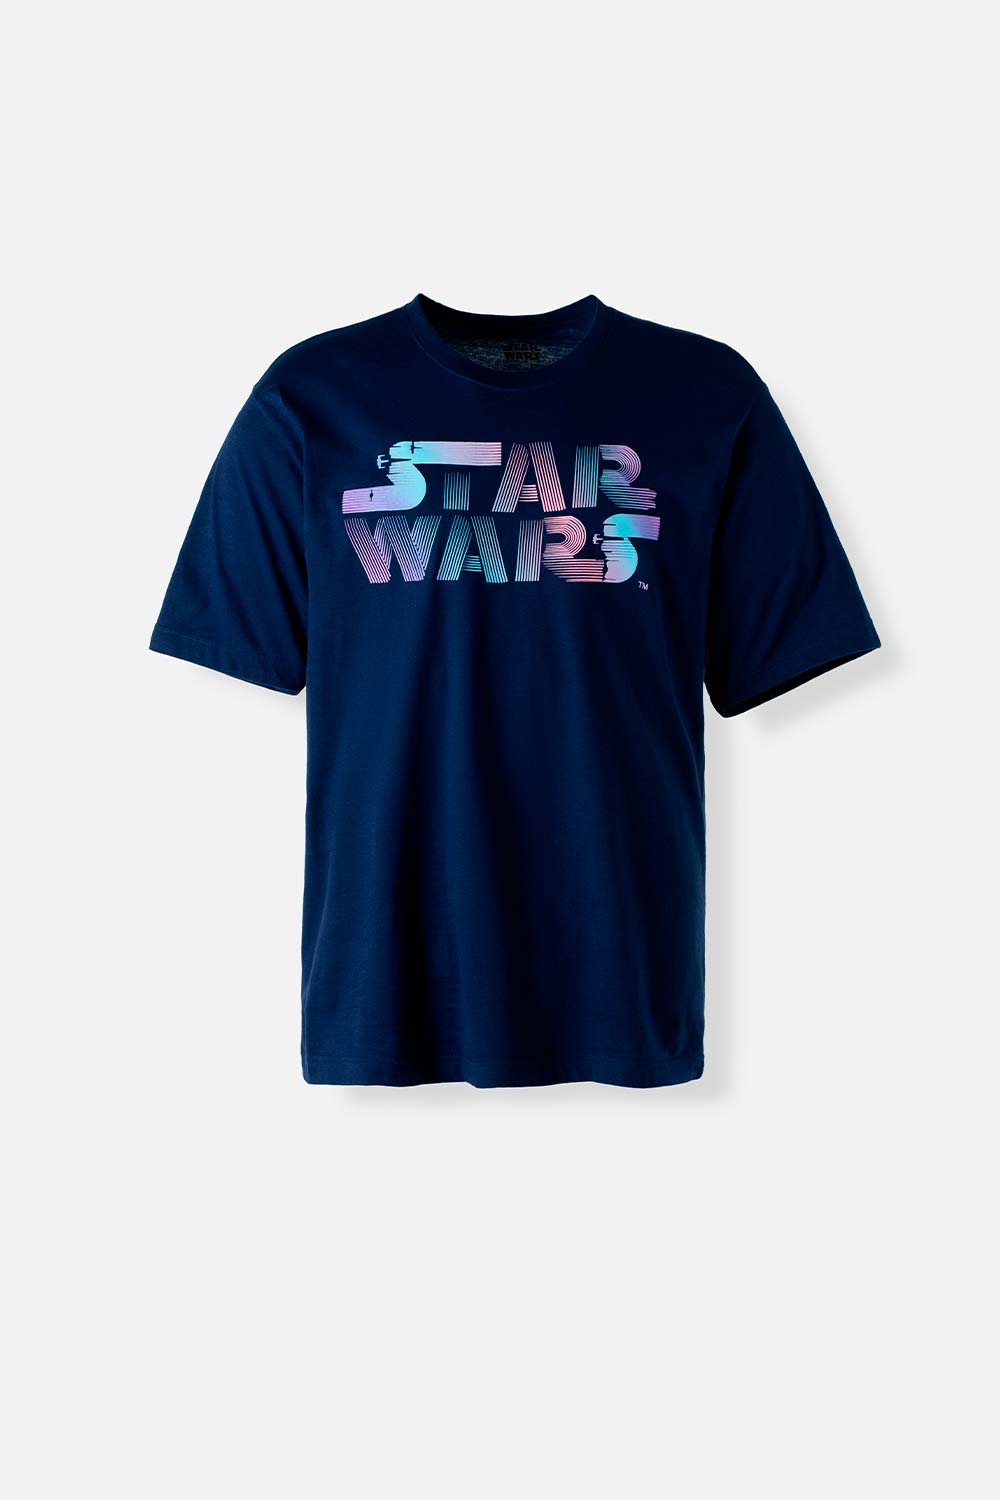 Camiseta de Star Wars manga corta azul para hombre XS-0